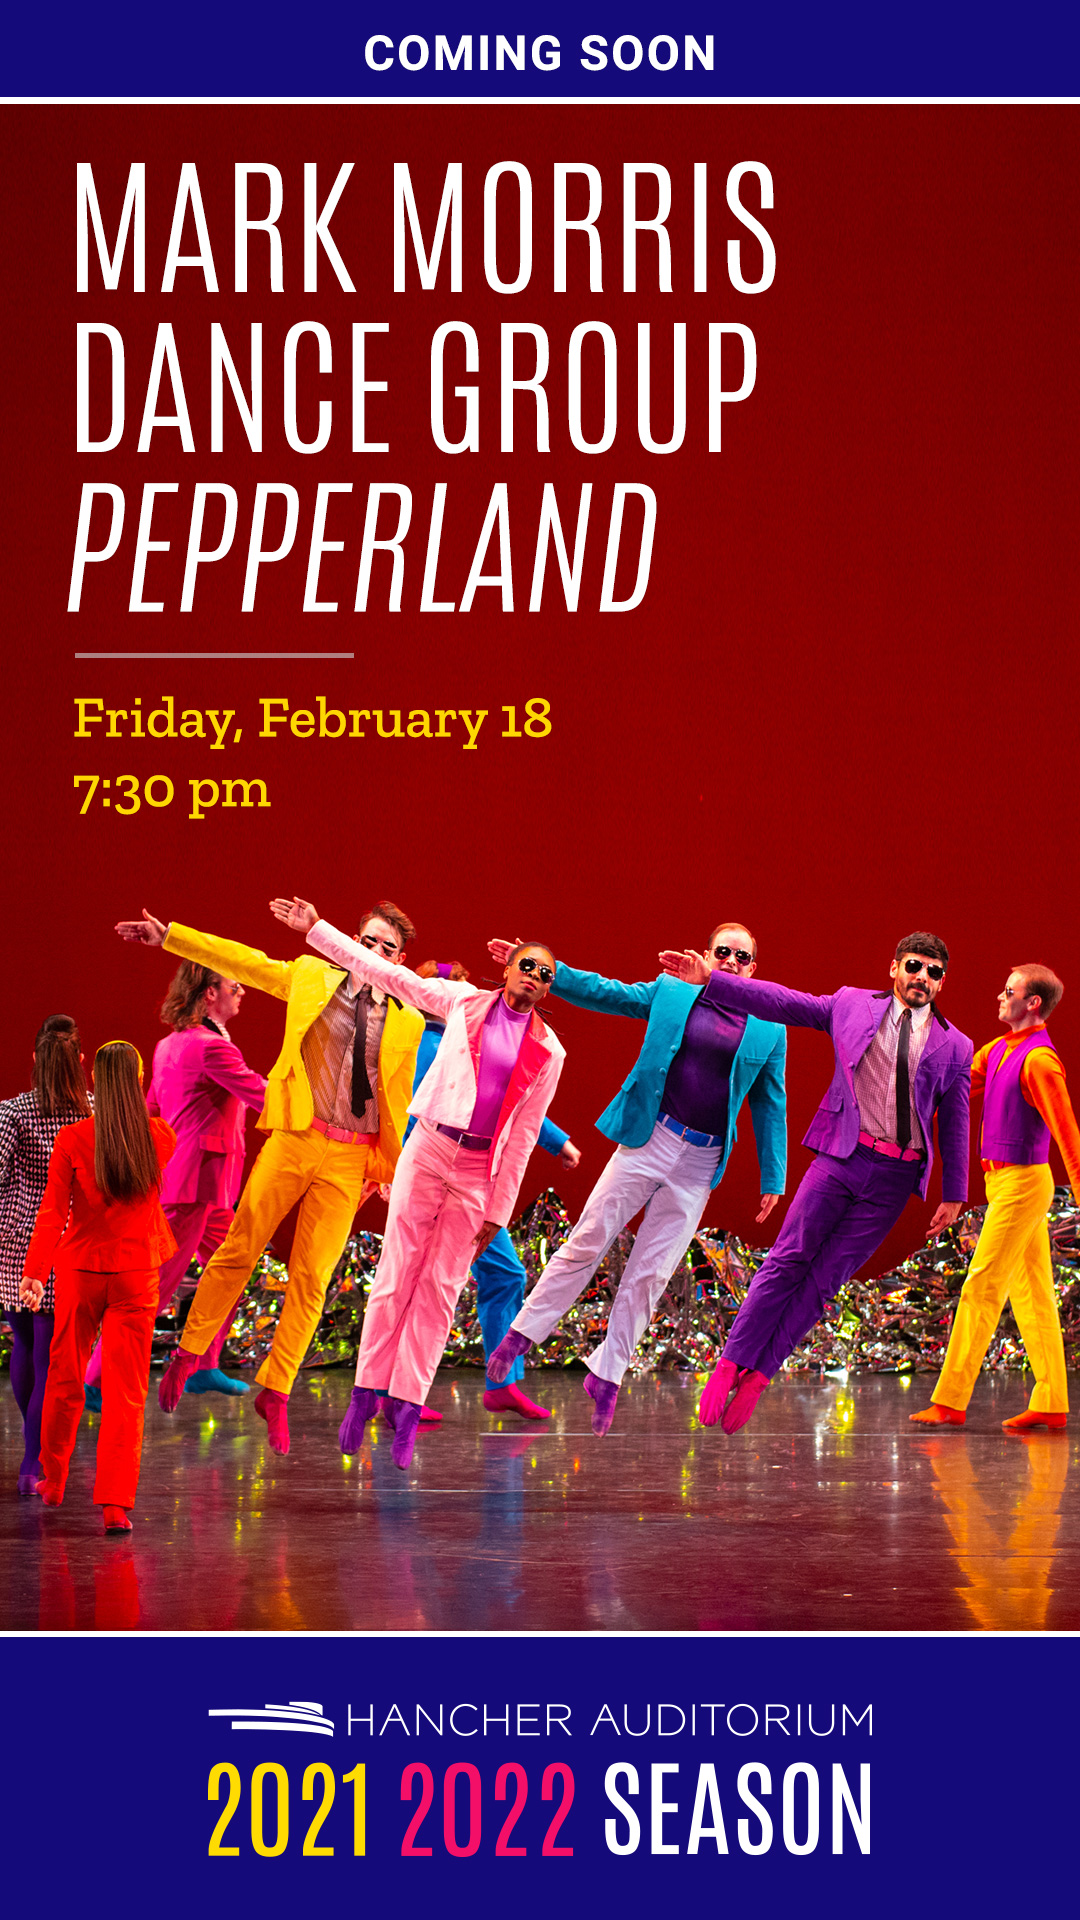 Mark Morris Dance Group, "Pepperland" - Coming Soon